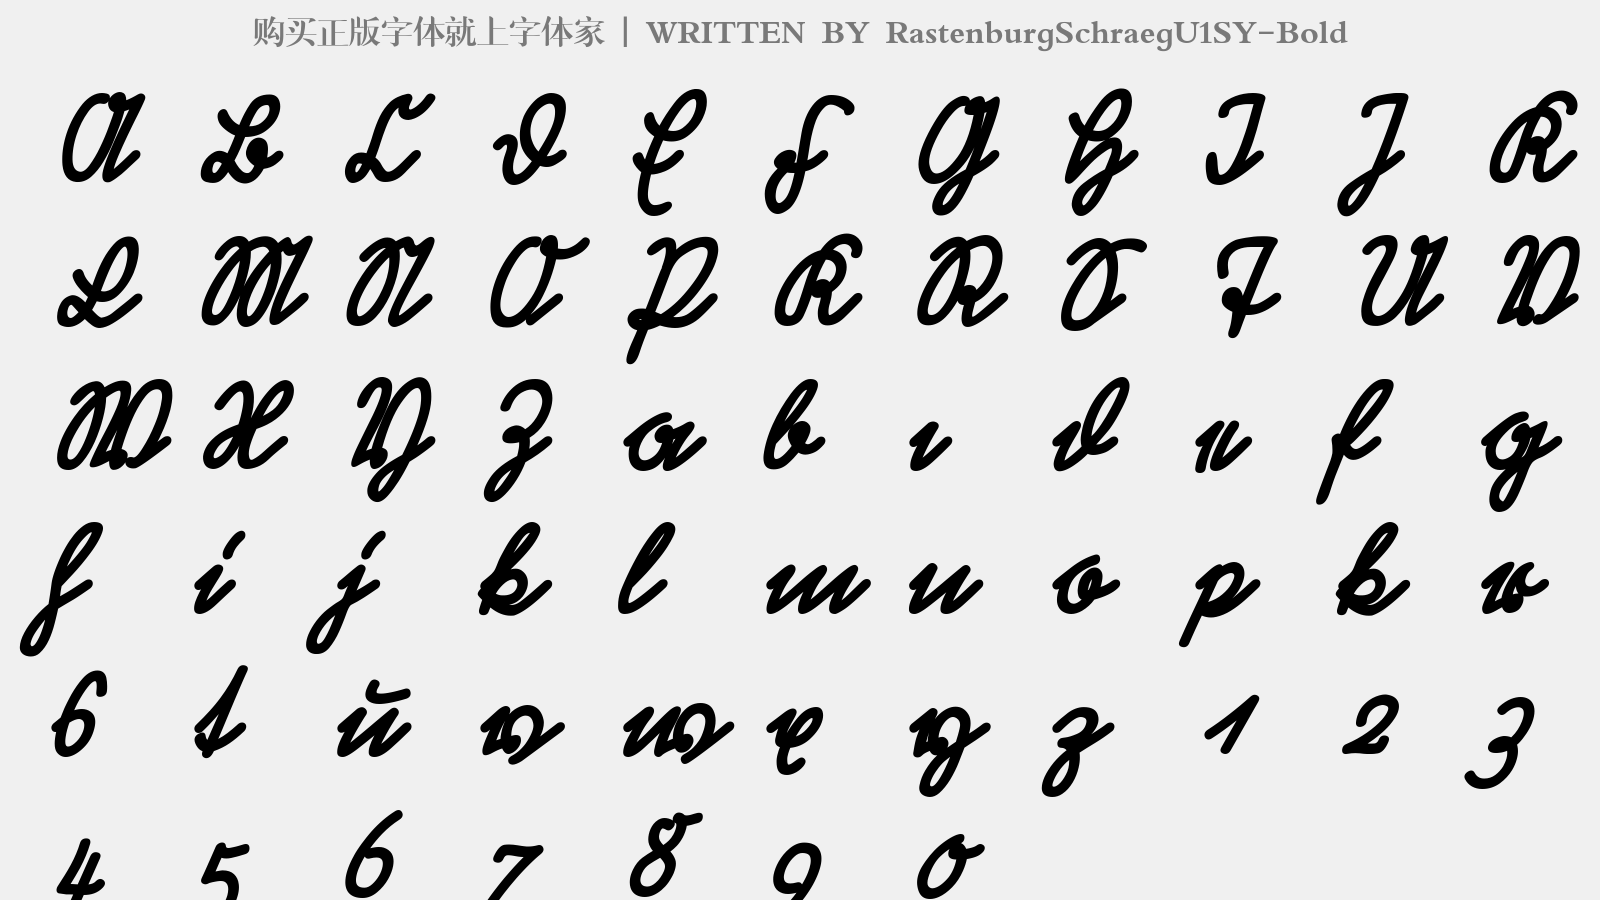 RastenburgSchraegU1SY-Bold - 大写字母/小写字母/数字